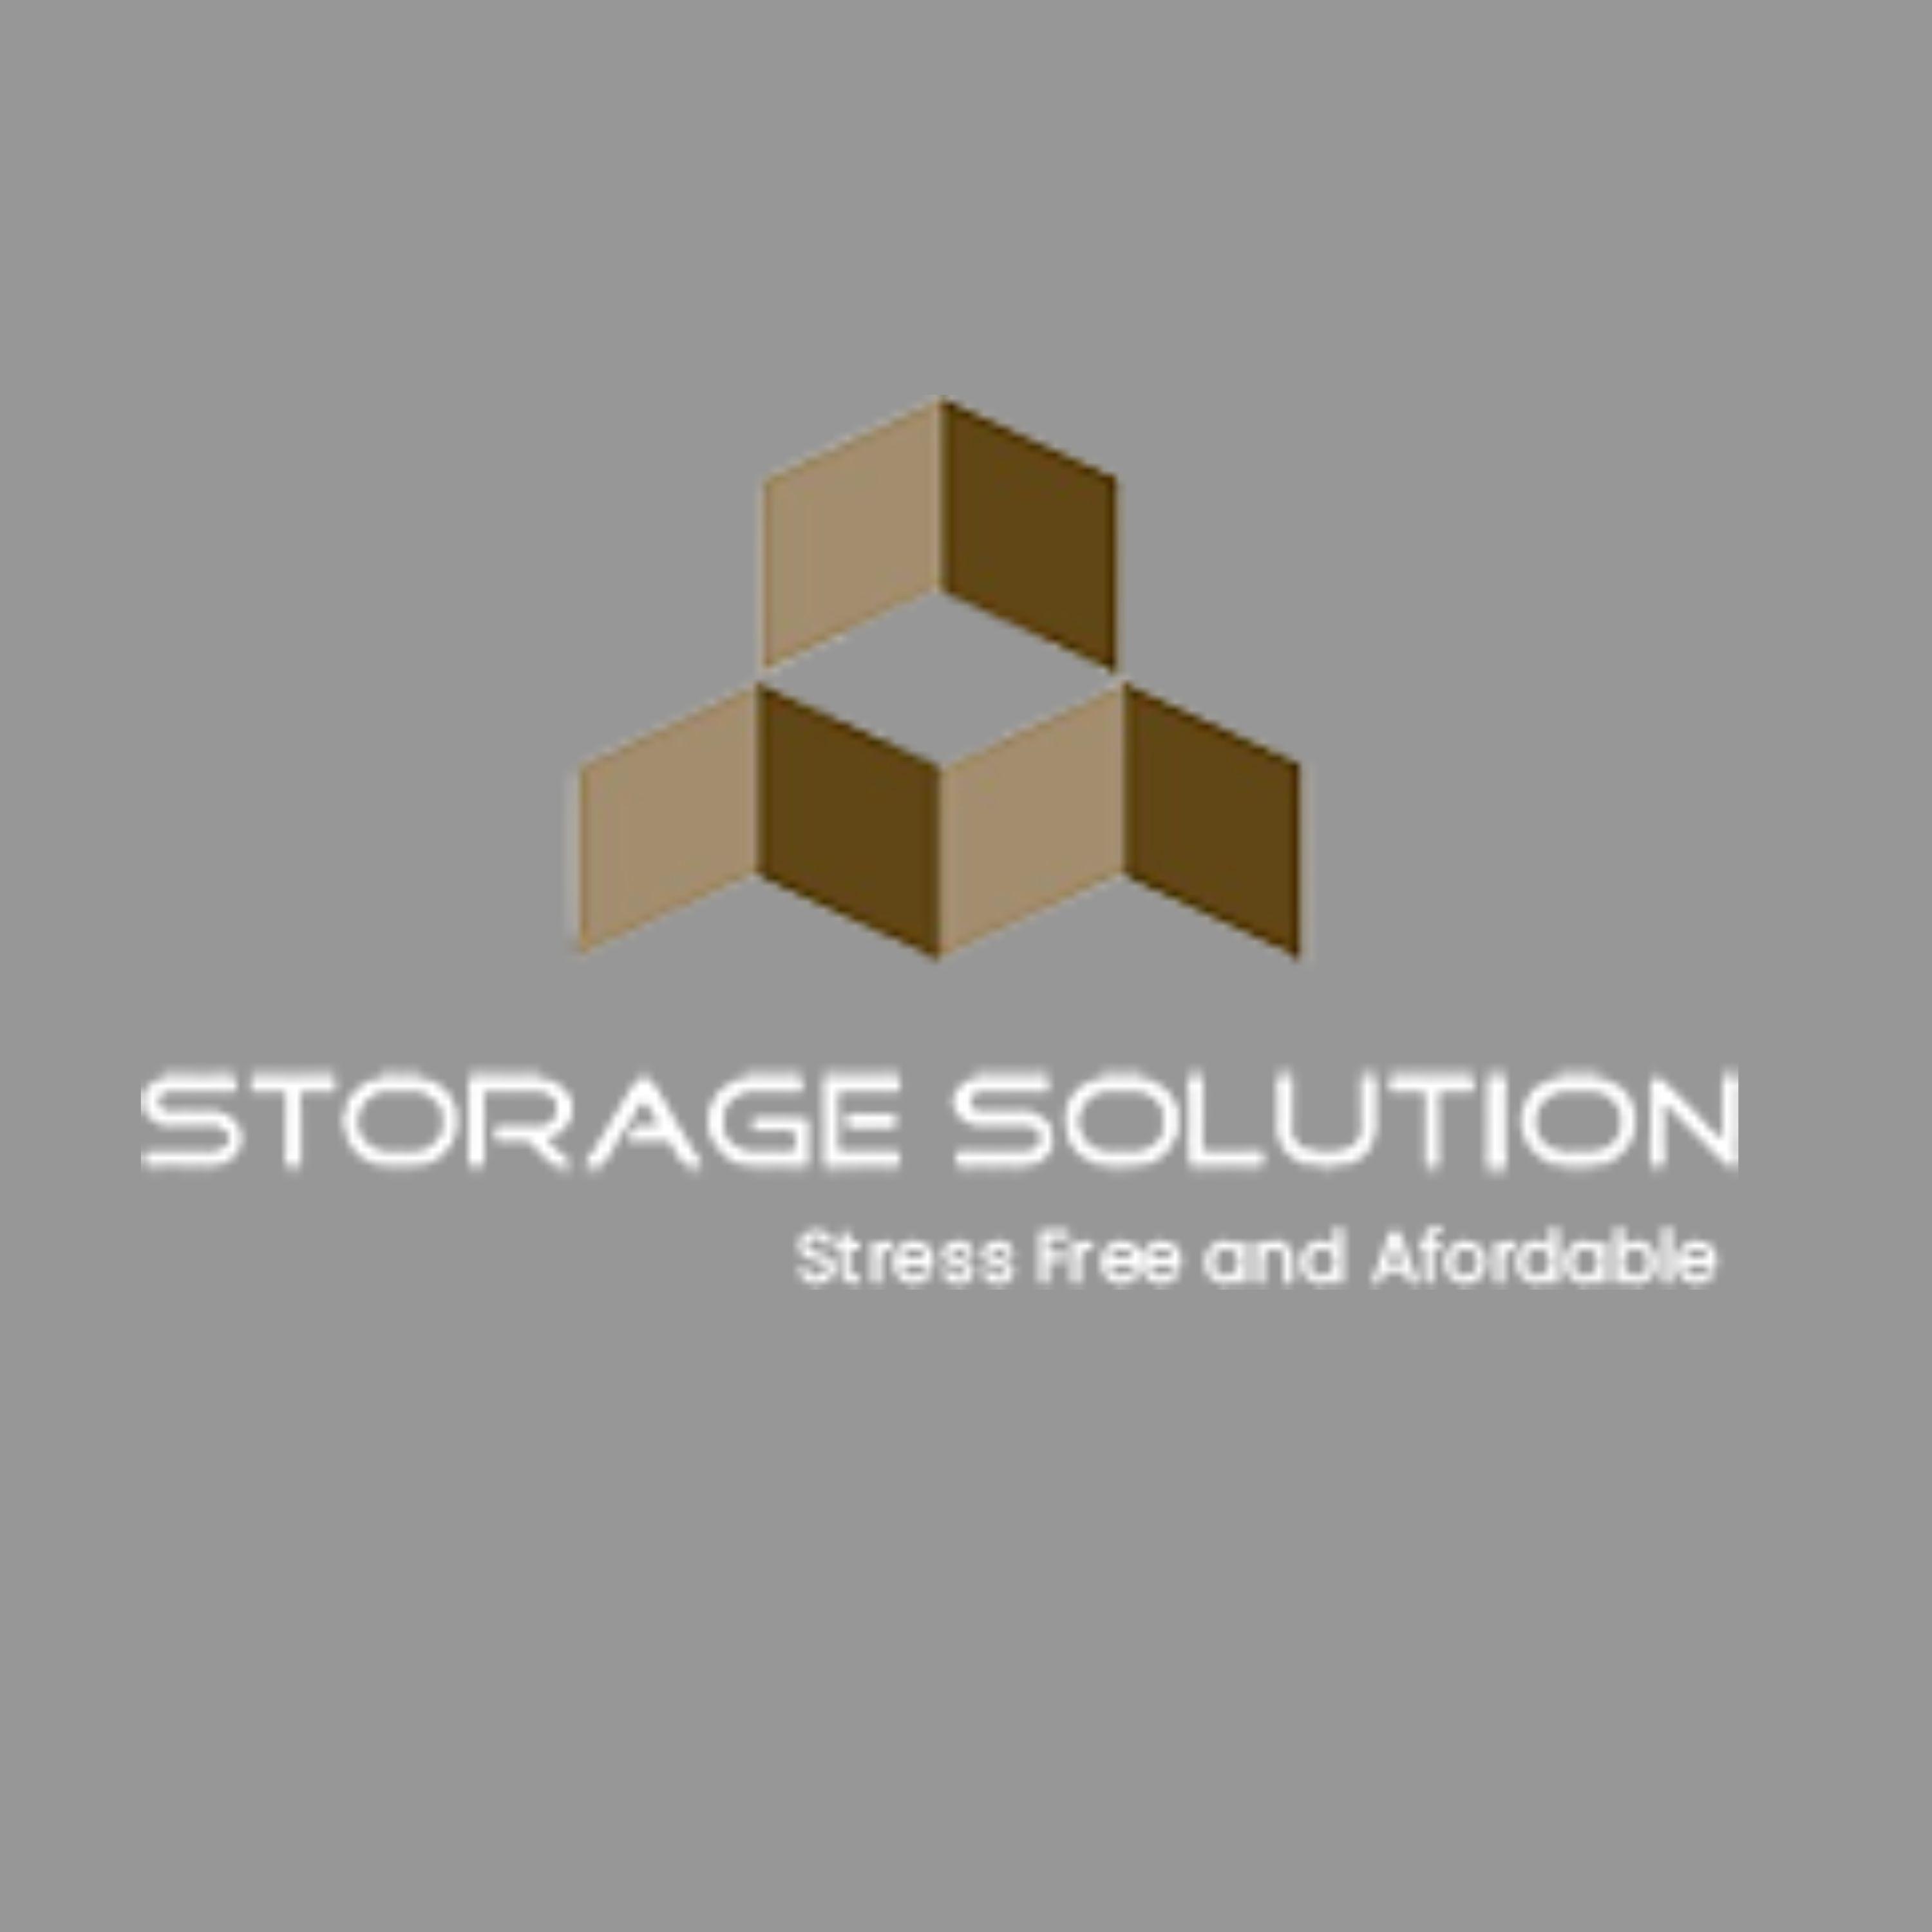 Storage Solution Dubai